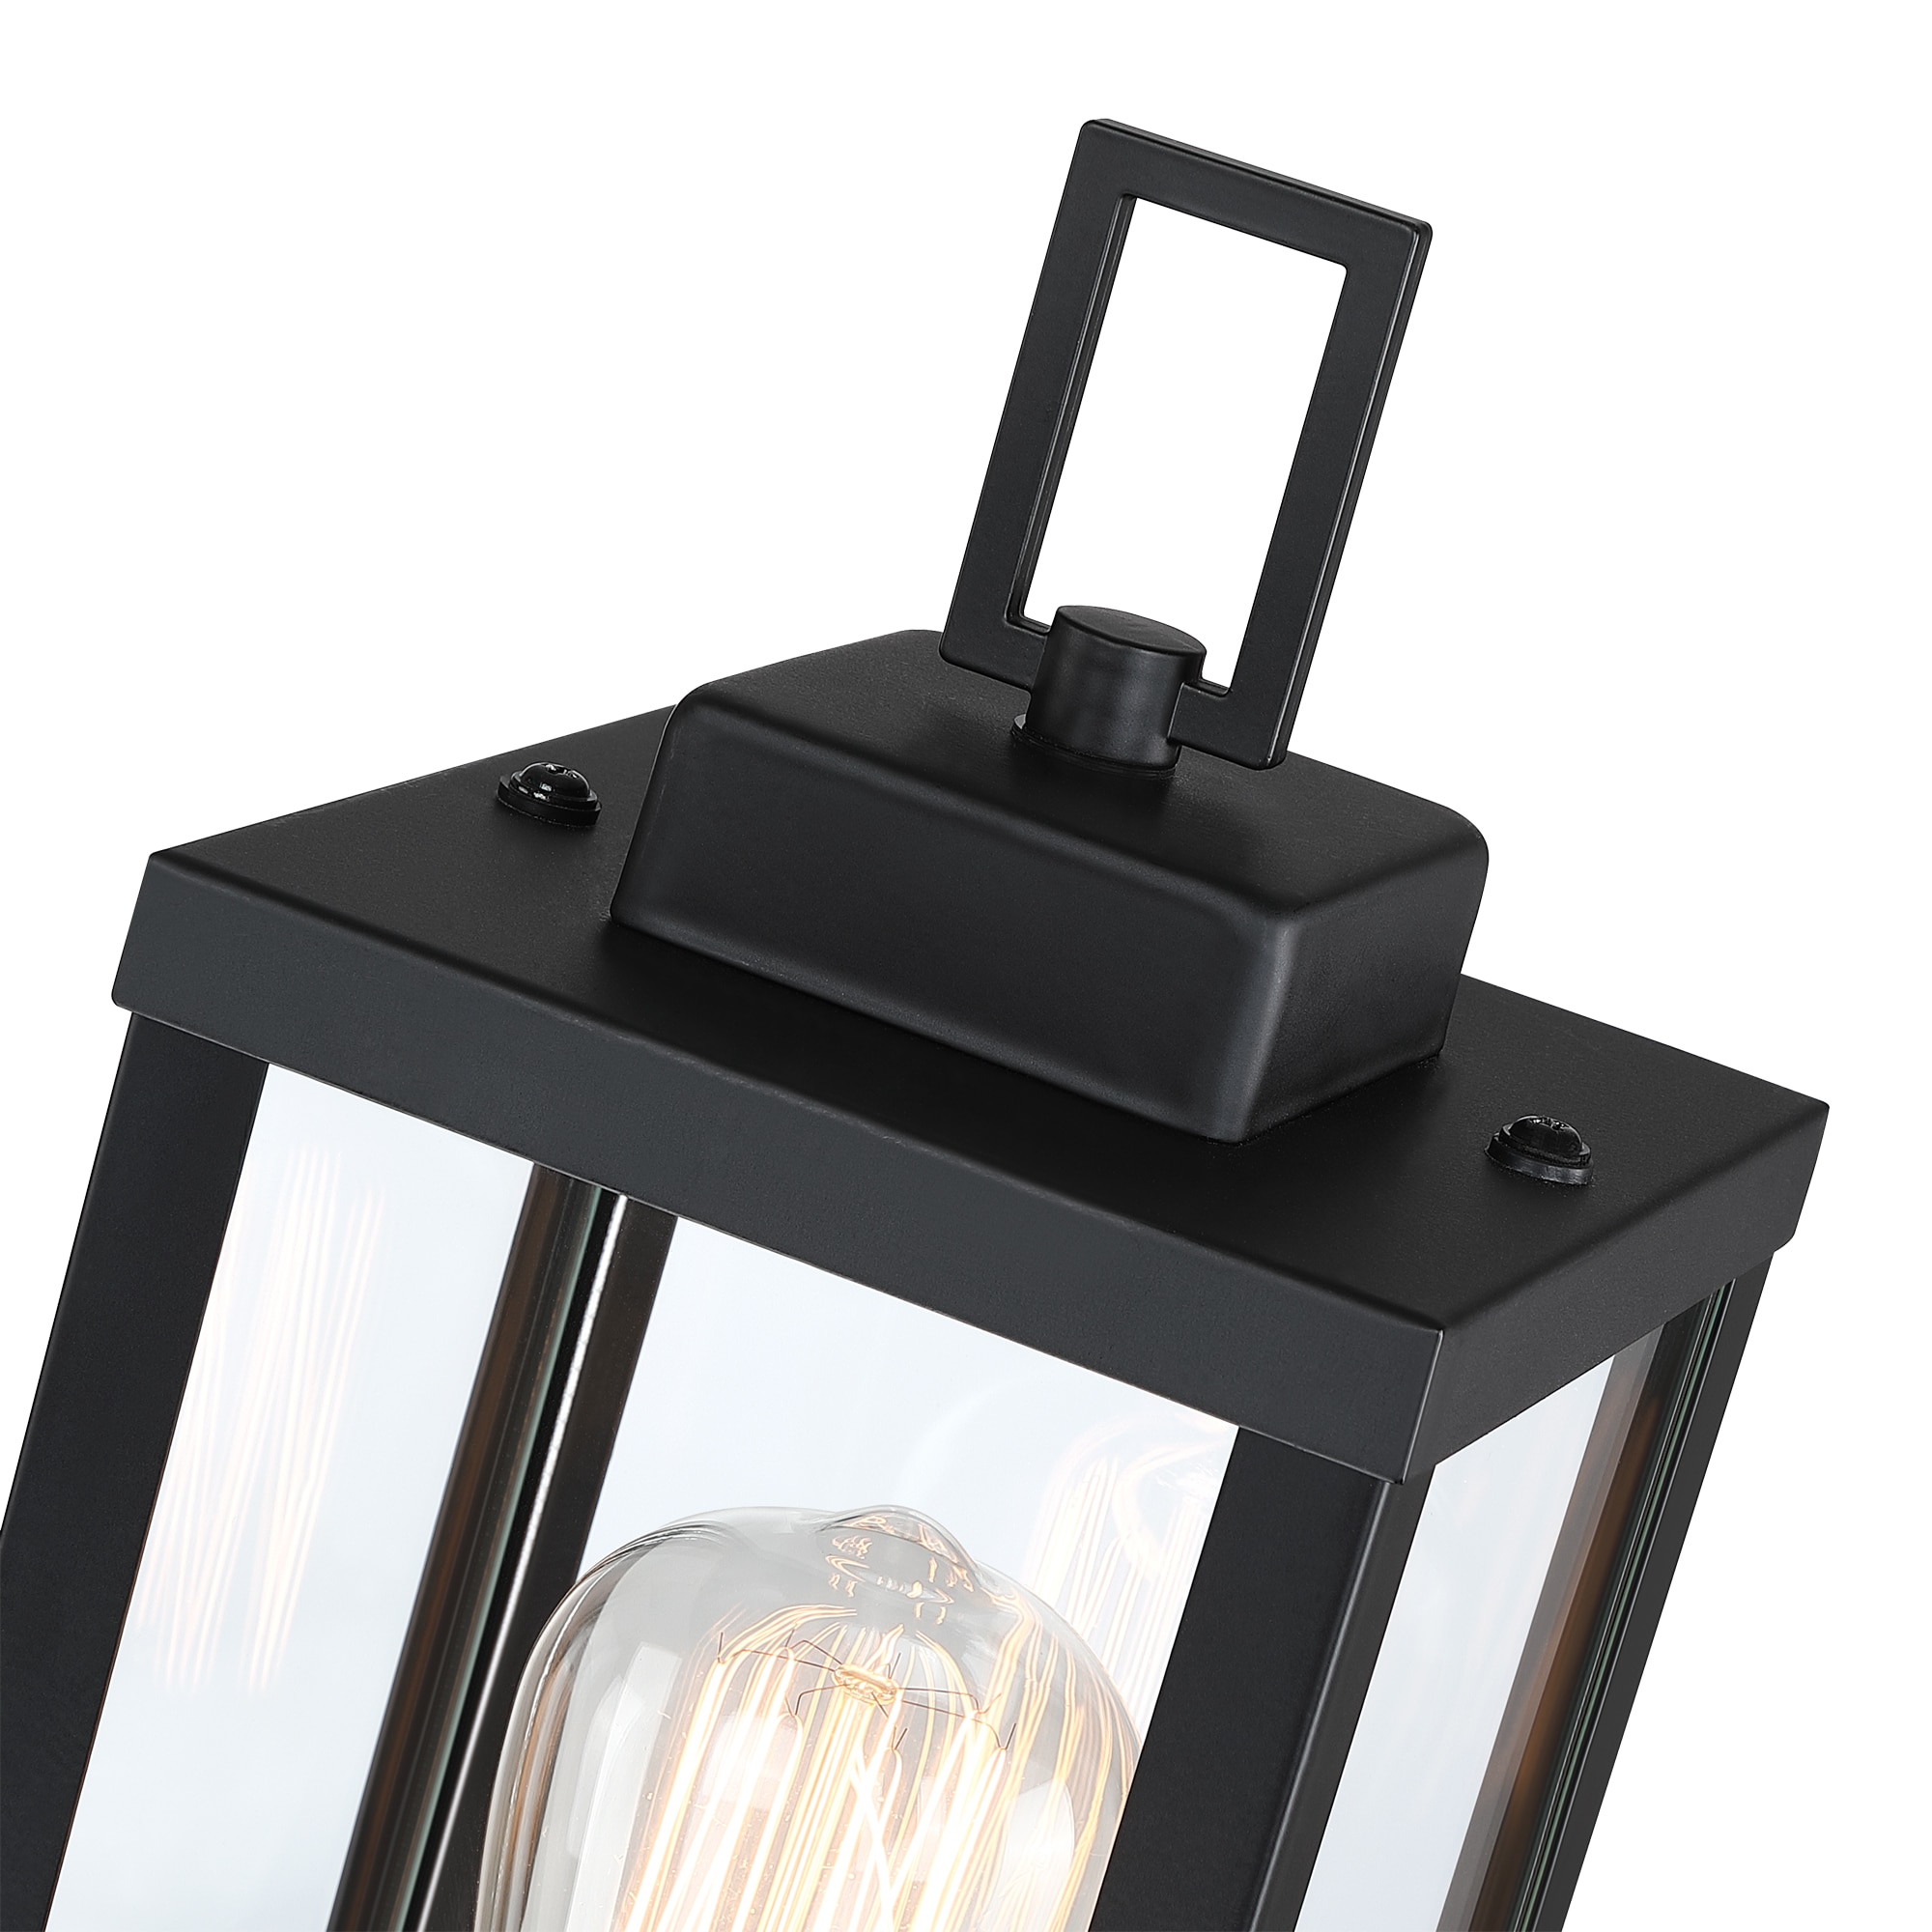 Hukoro 16.5-in Matte Black Modern/Contemporary Outdoor Light Post Lantern